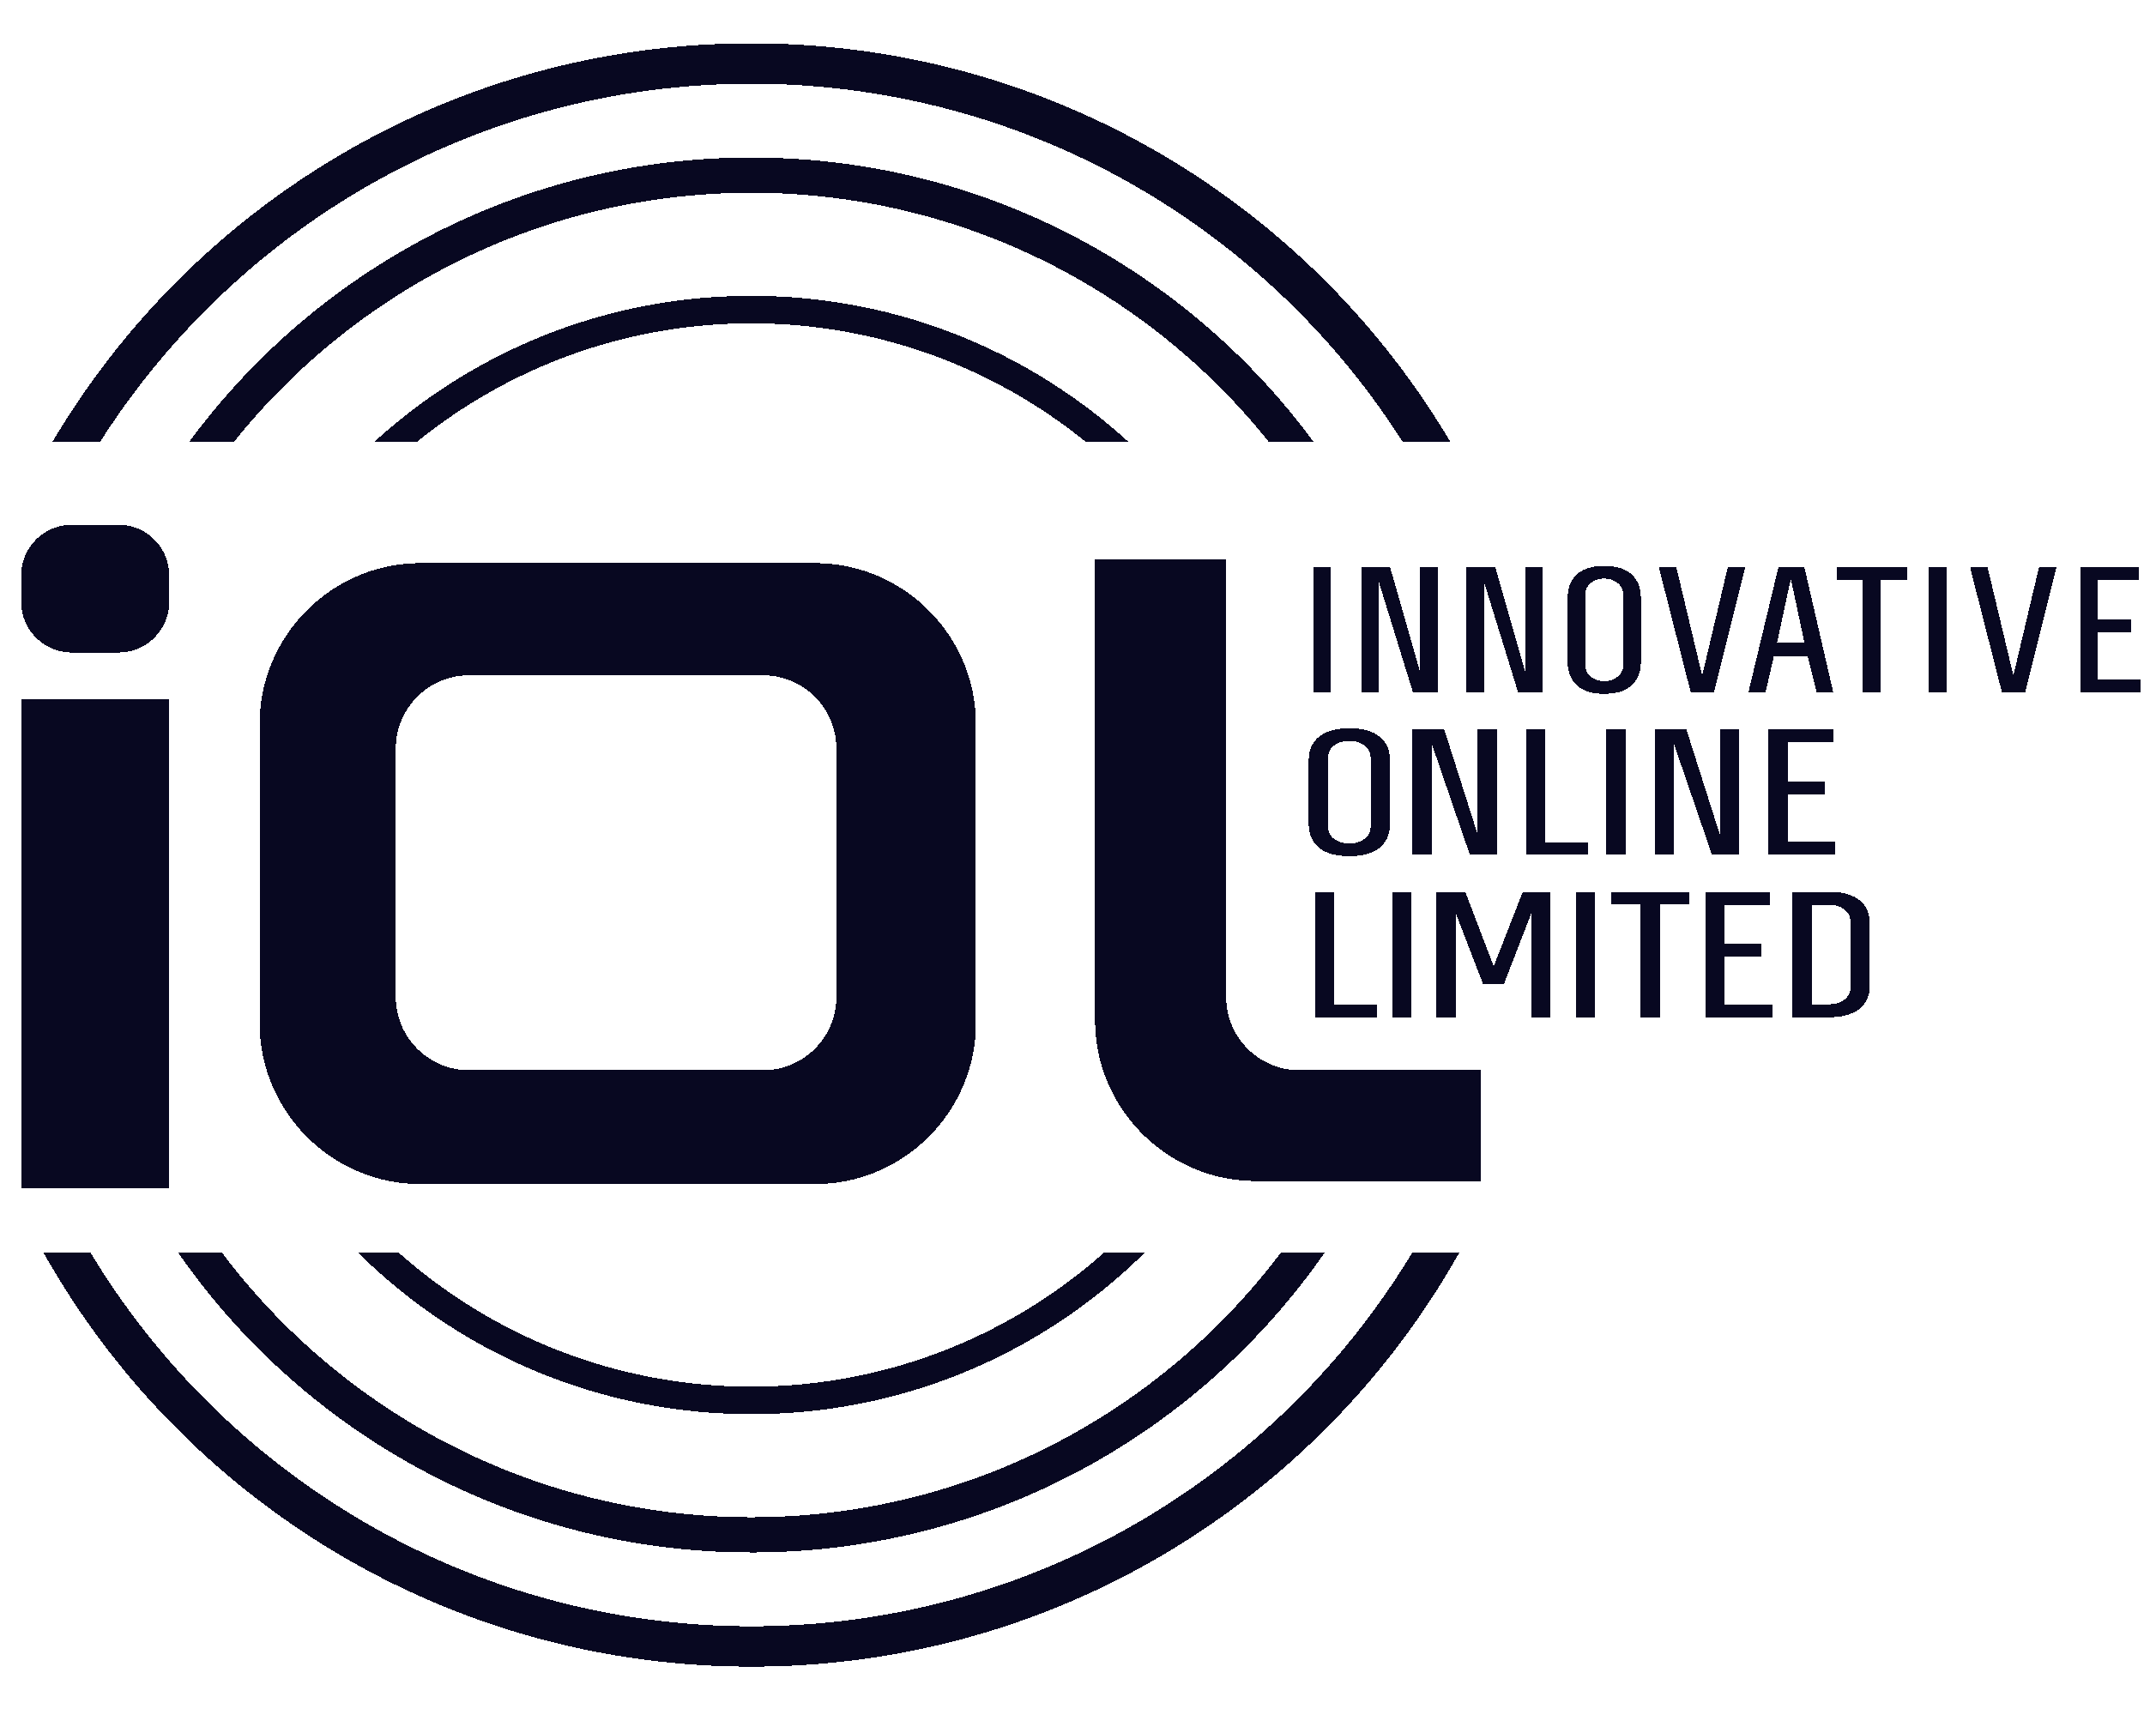 Innovative Online Ltd